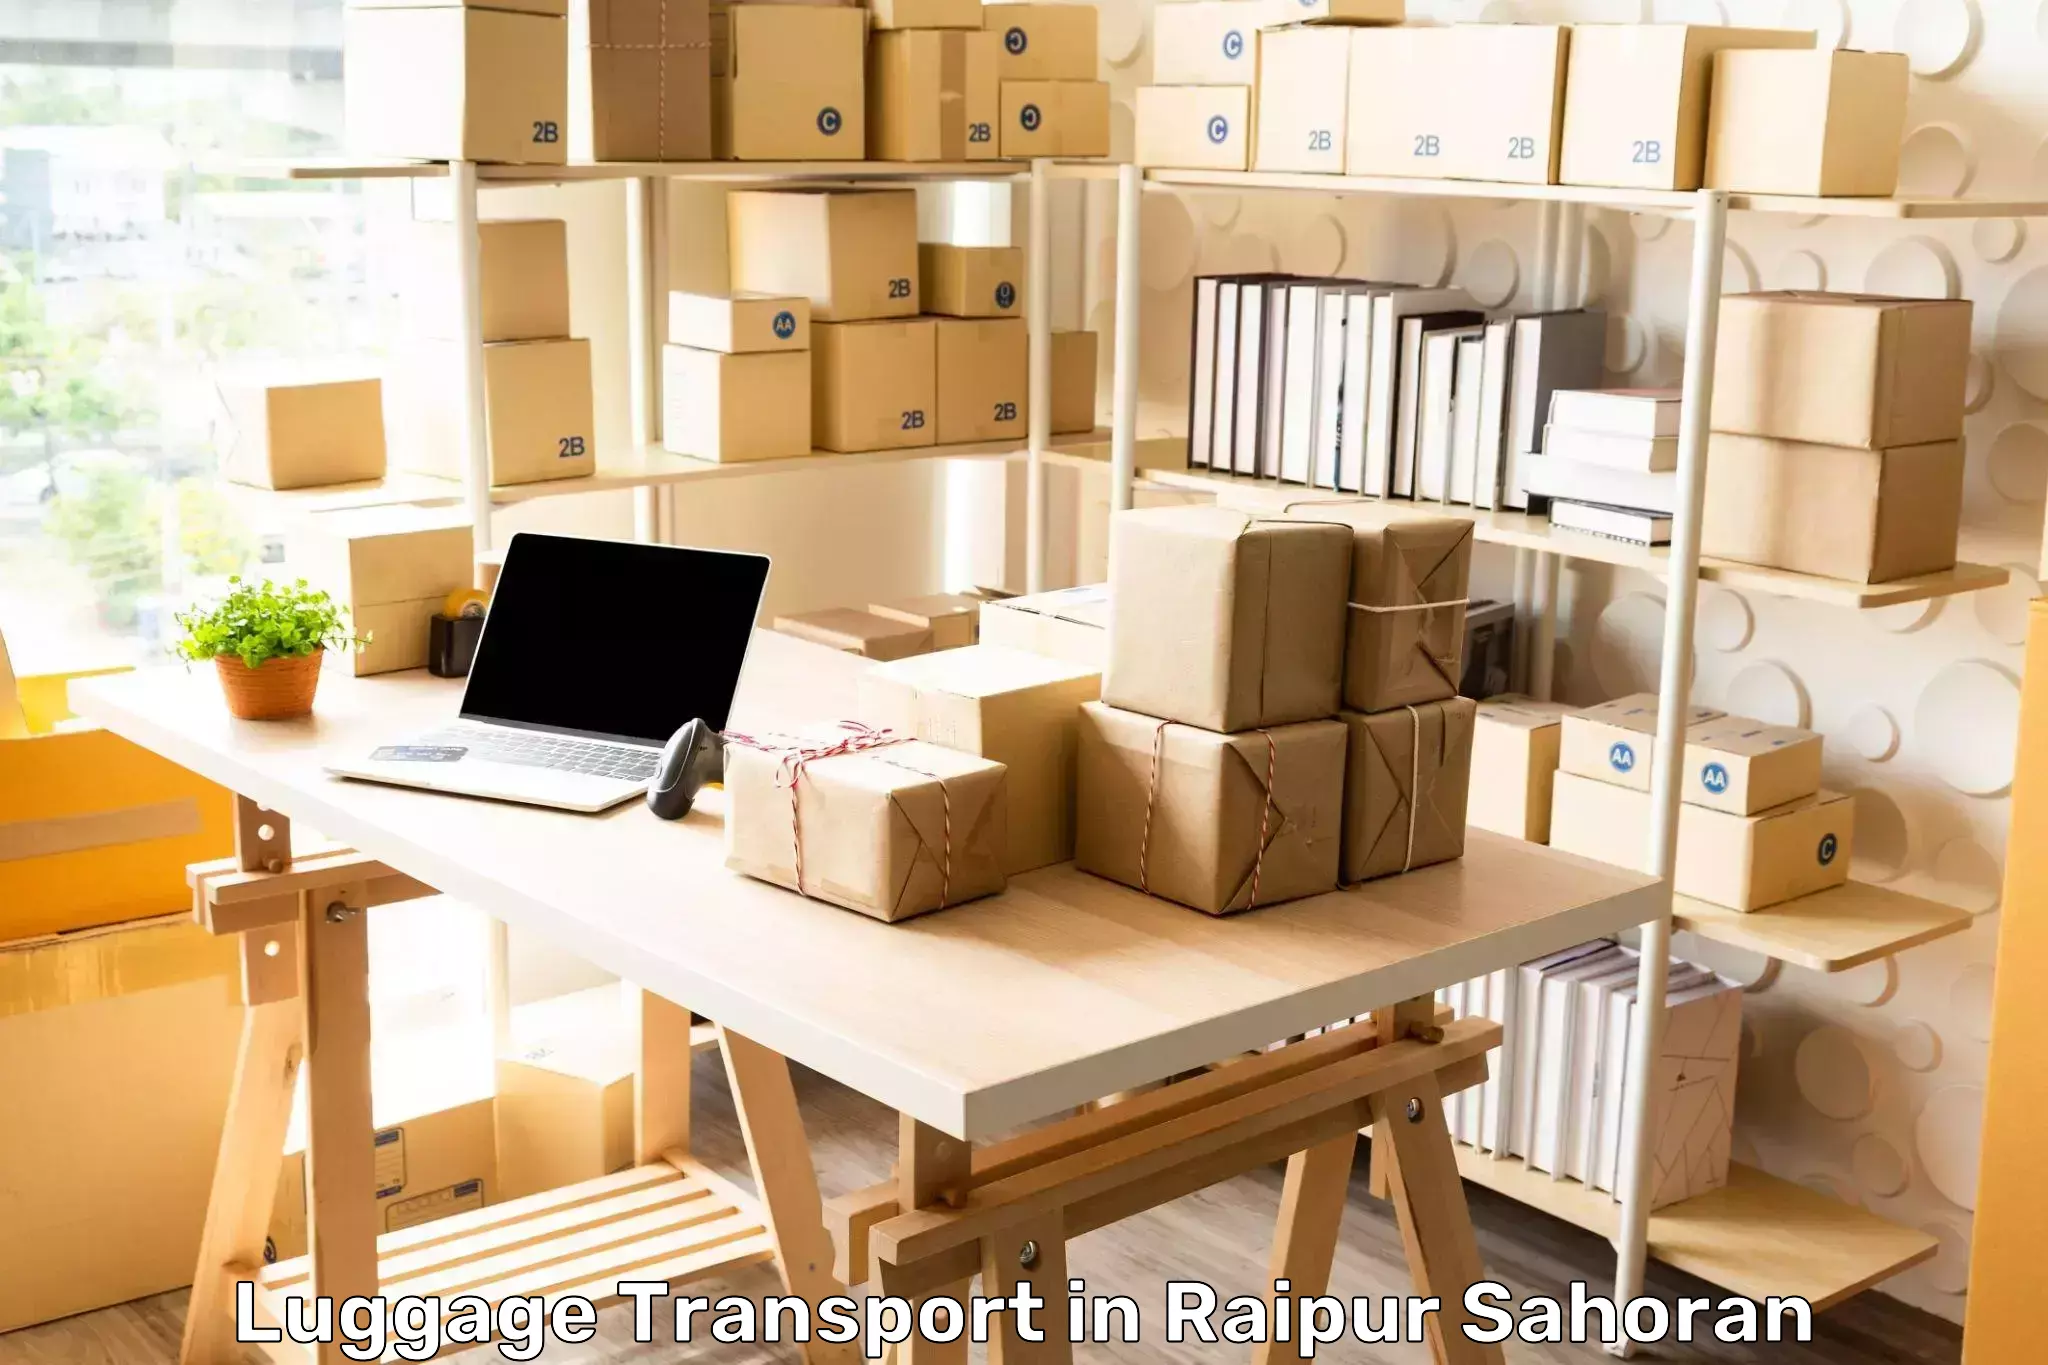 Heavy luggage shipping in Raipur Sahoran